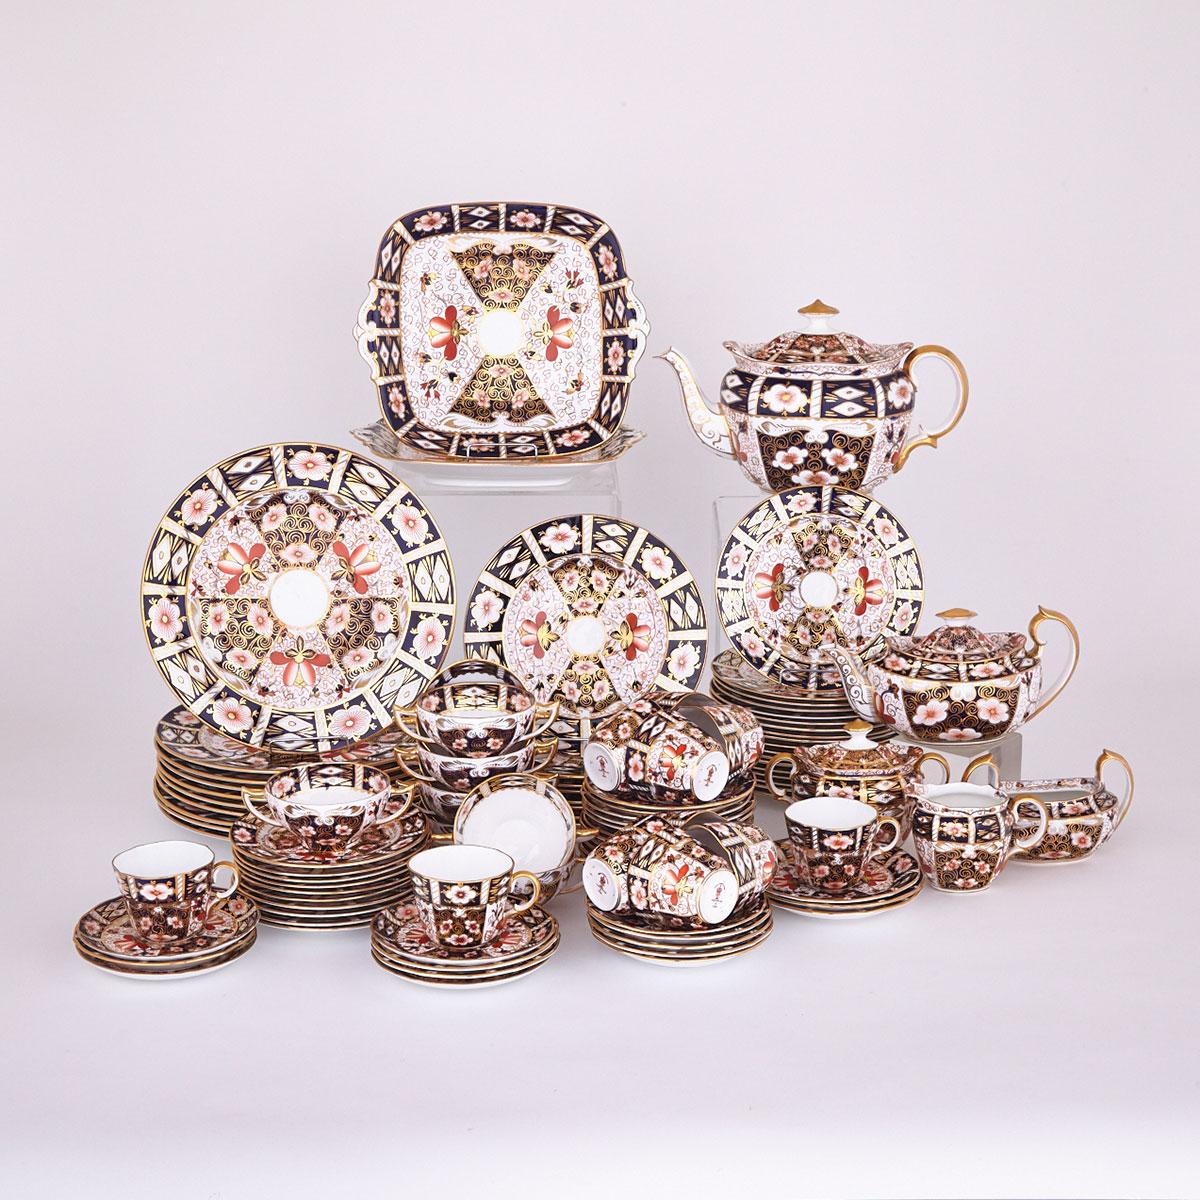 Royal Crown Derby ‘Imari’ (2451) Pattern Service, 20th century